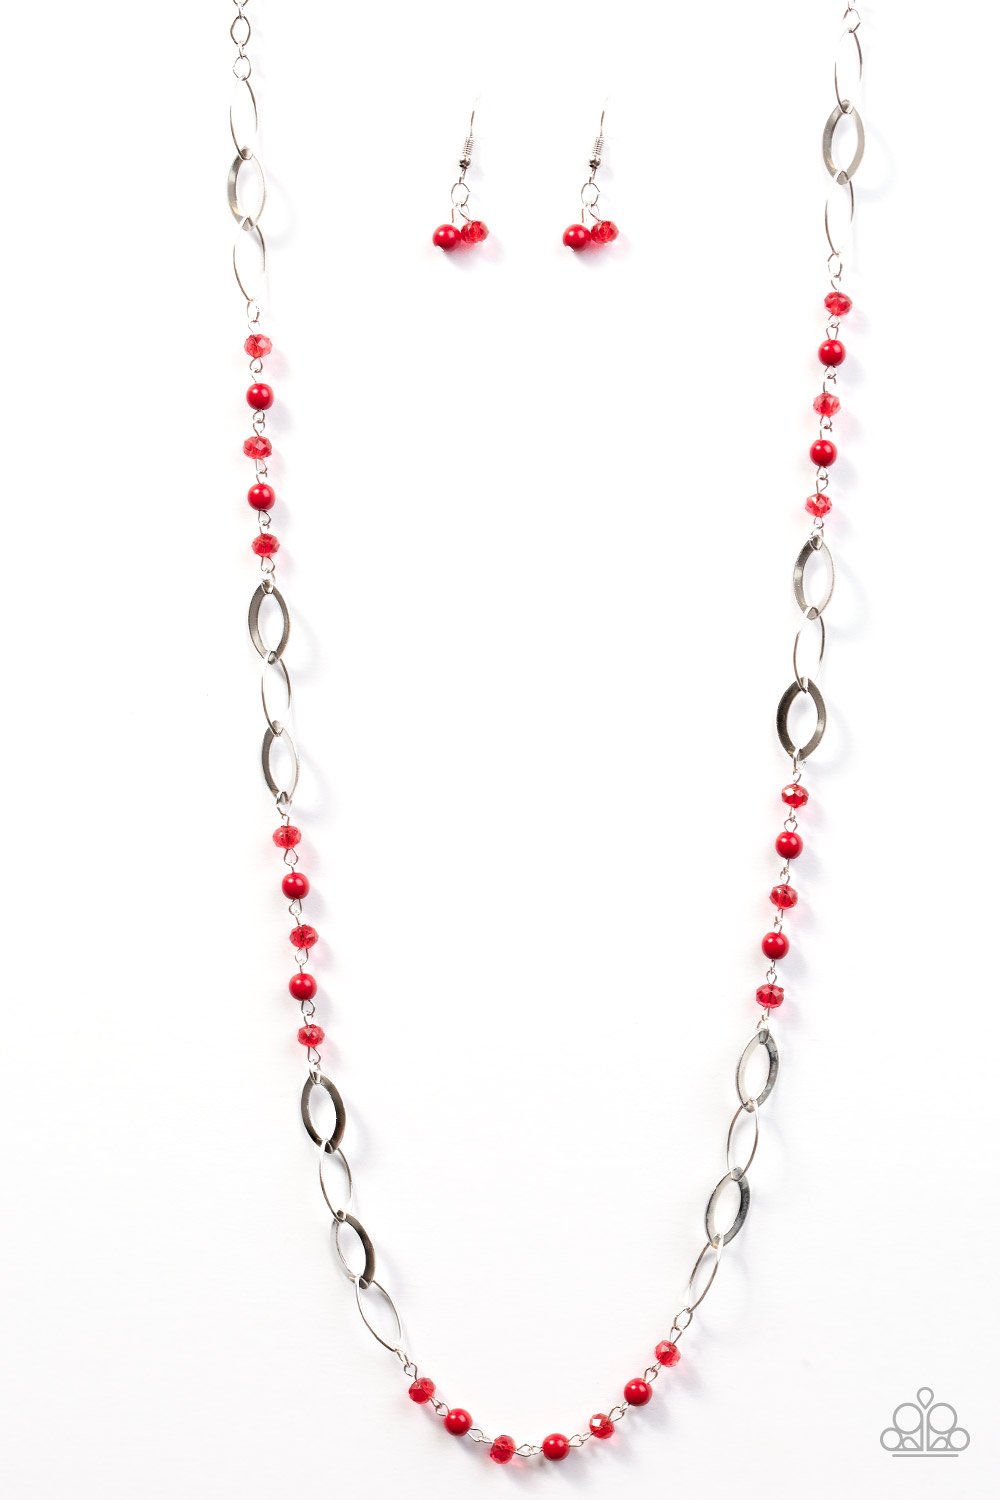 Sparkling Sophistication - Red necklace